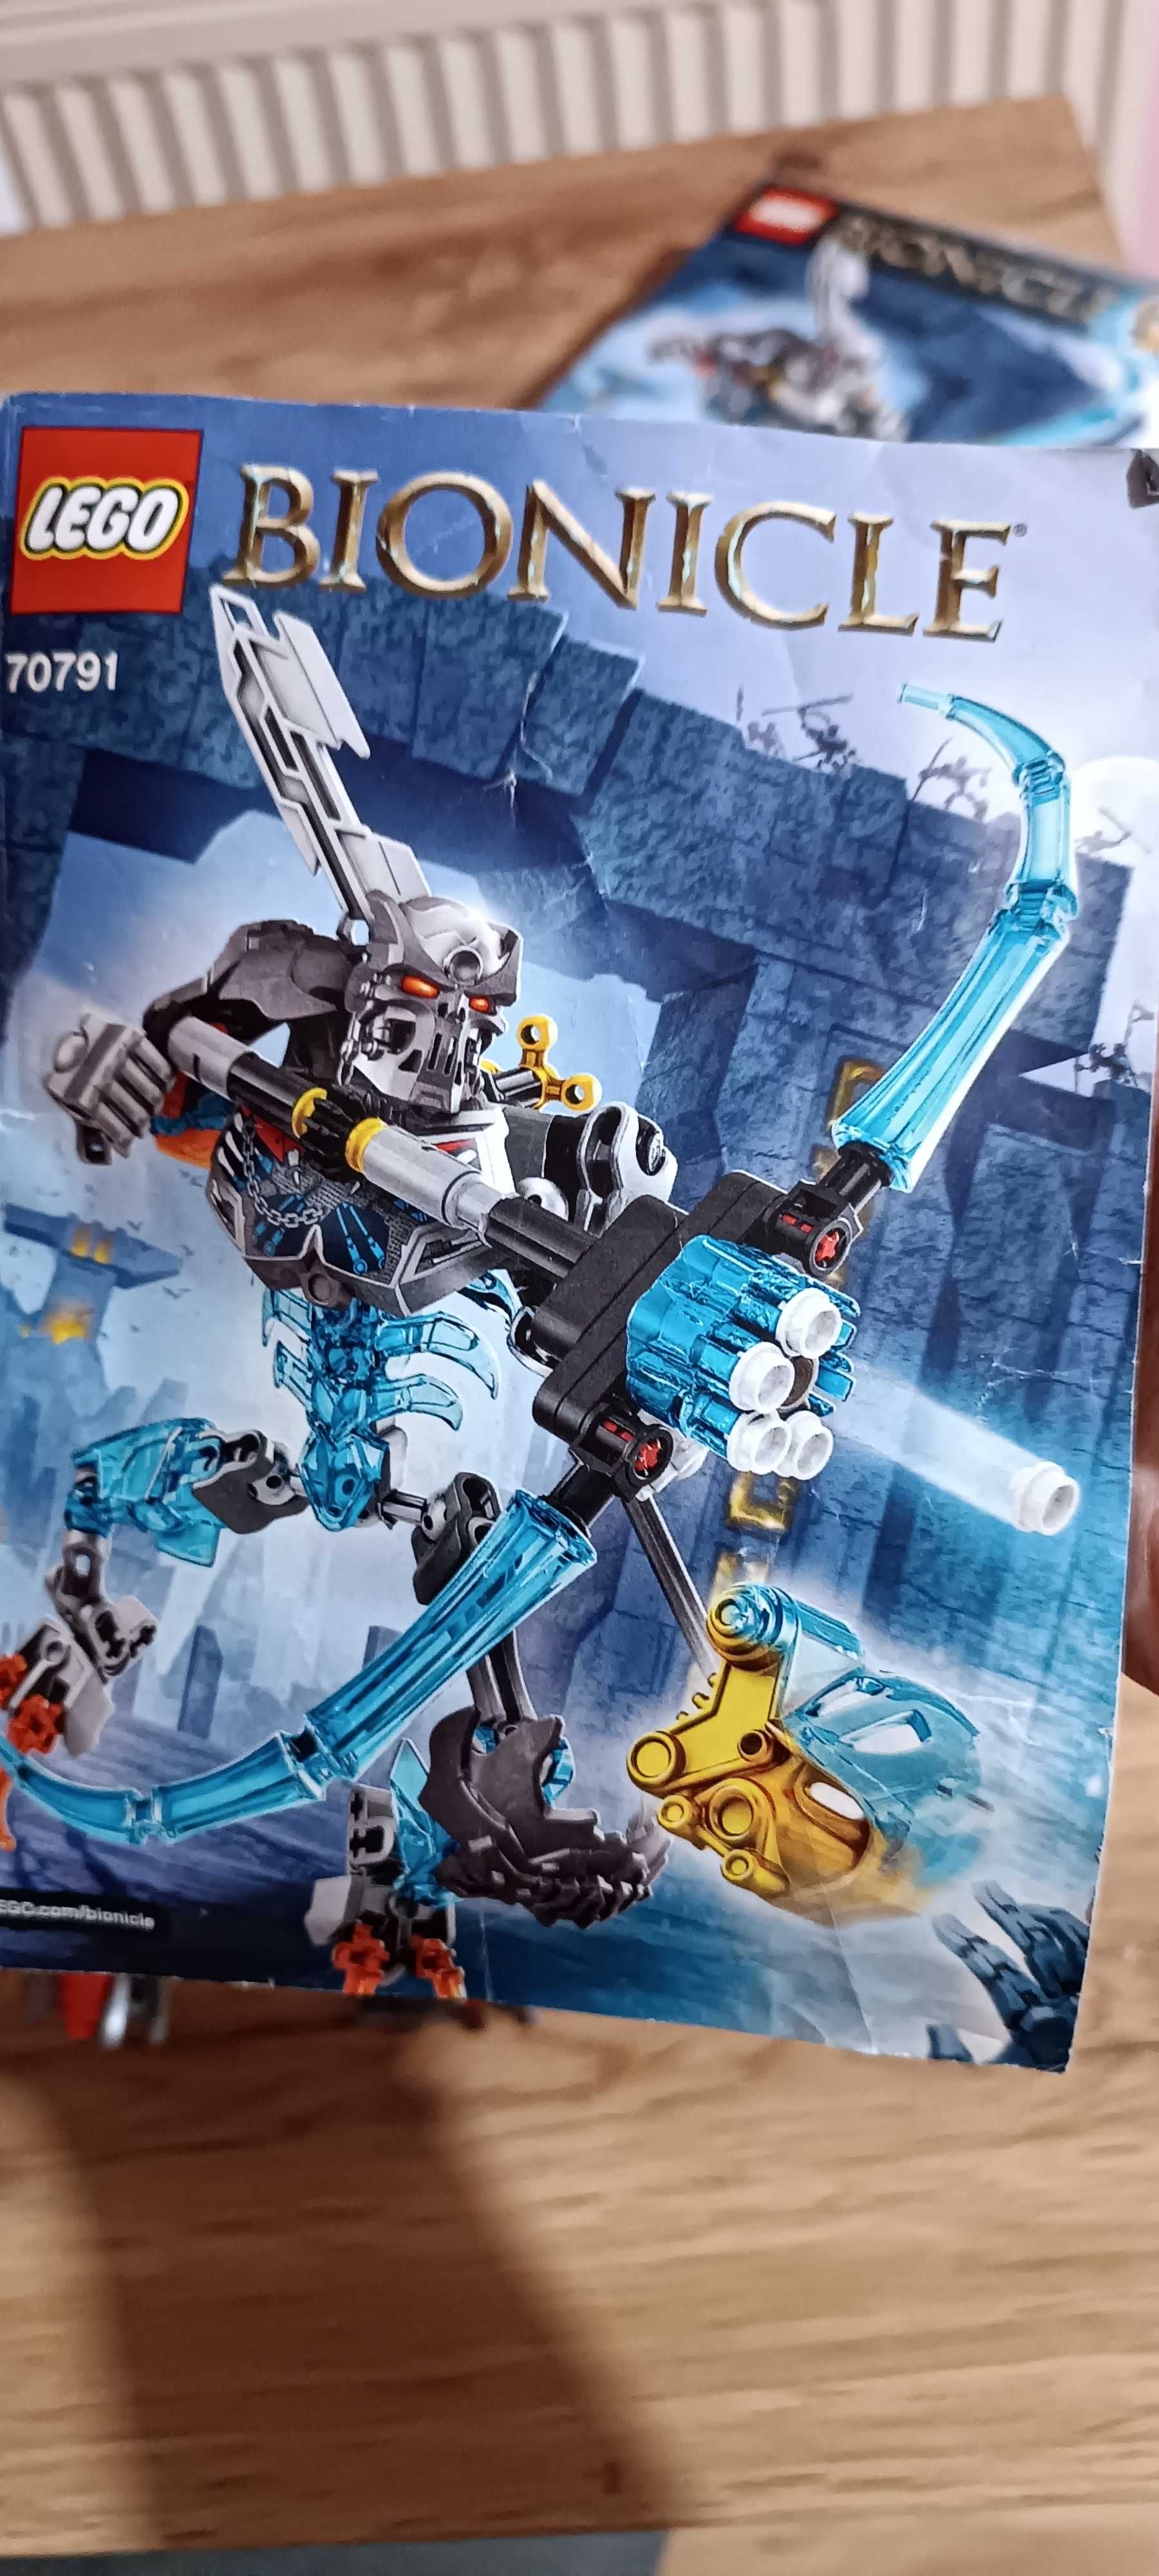 Robot Bionicle skull